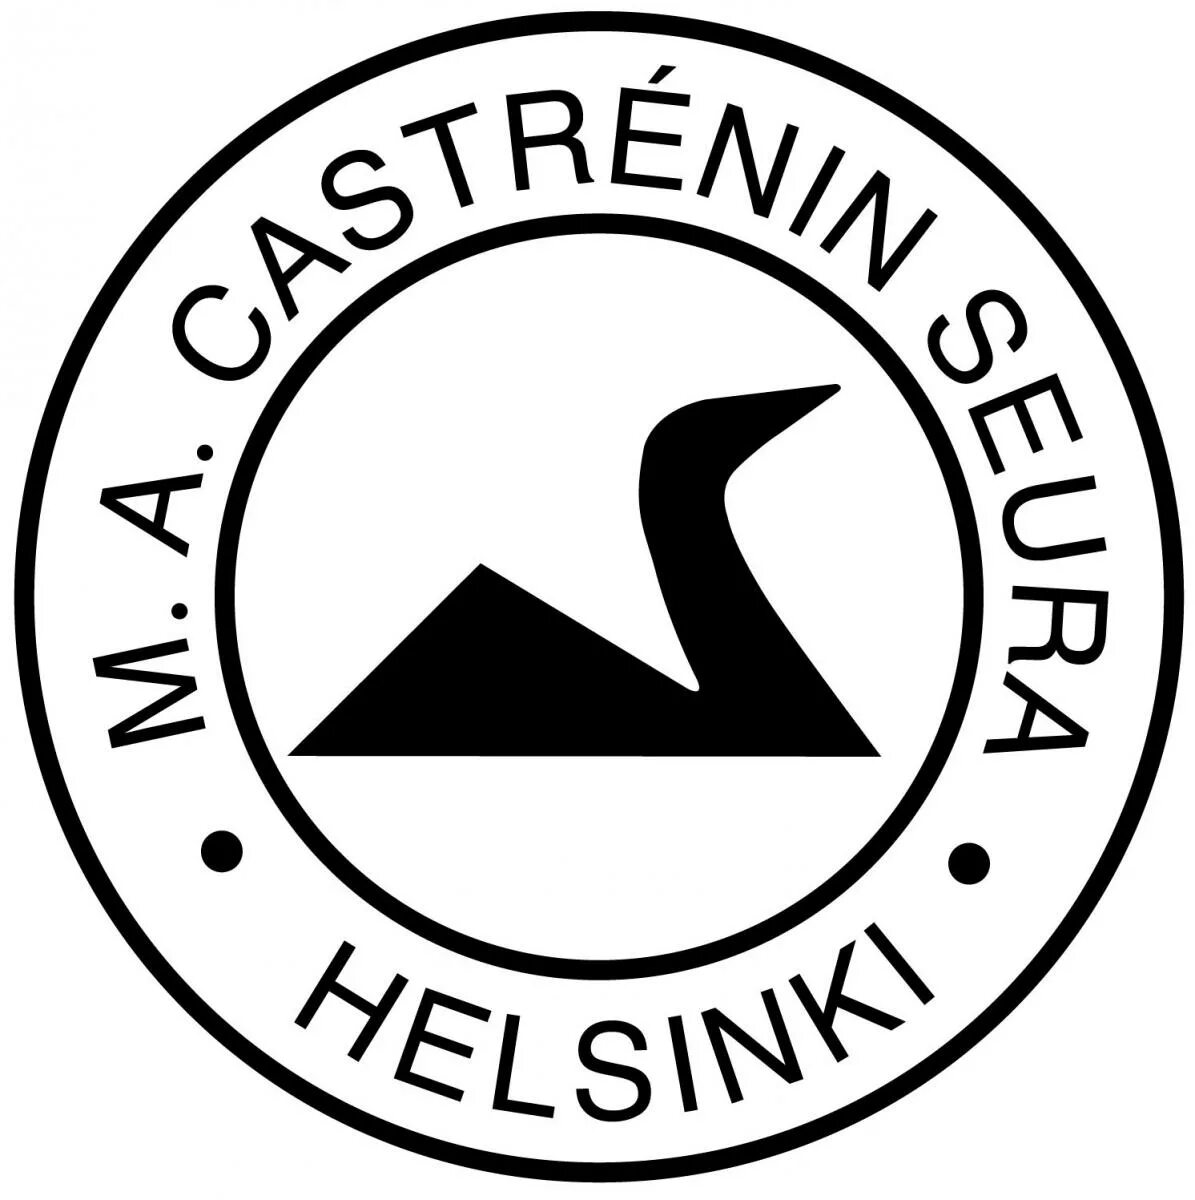 Society m. Общество Кастрена. Общество Кастрена Финляндия. Общество м. Castr logo.